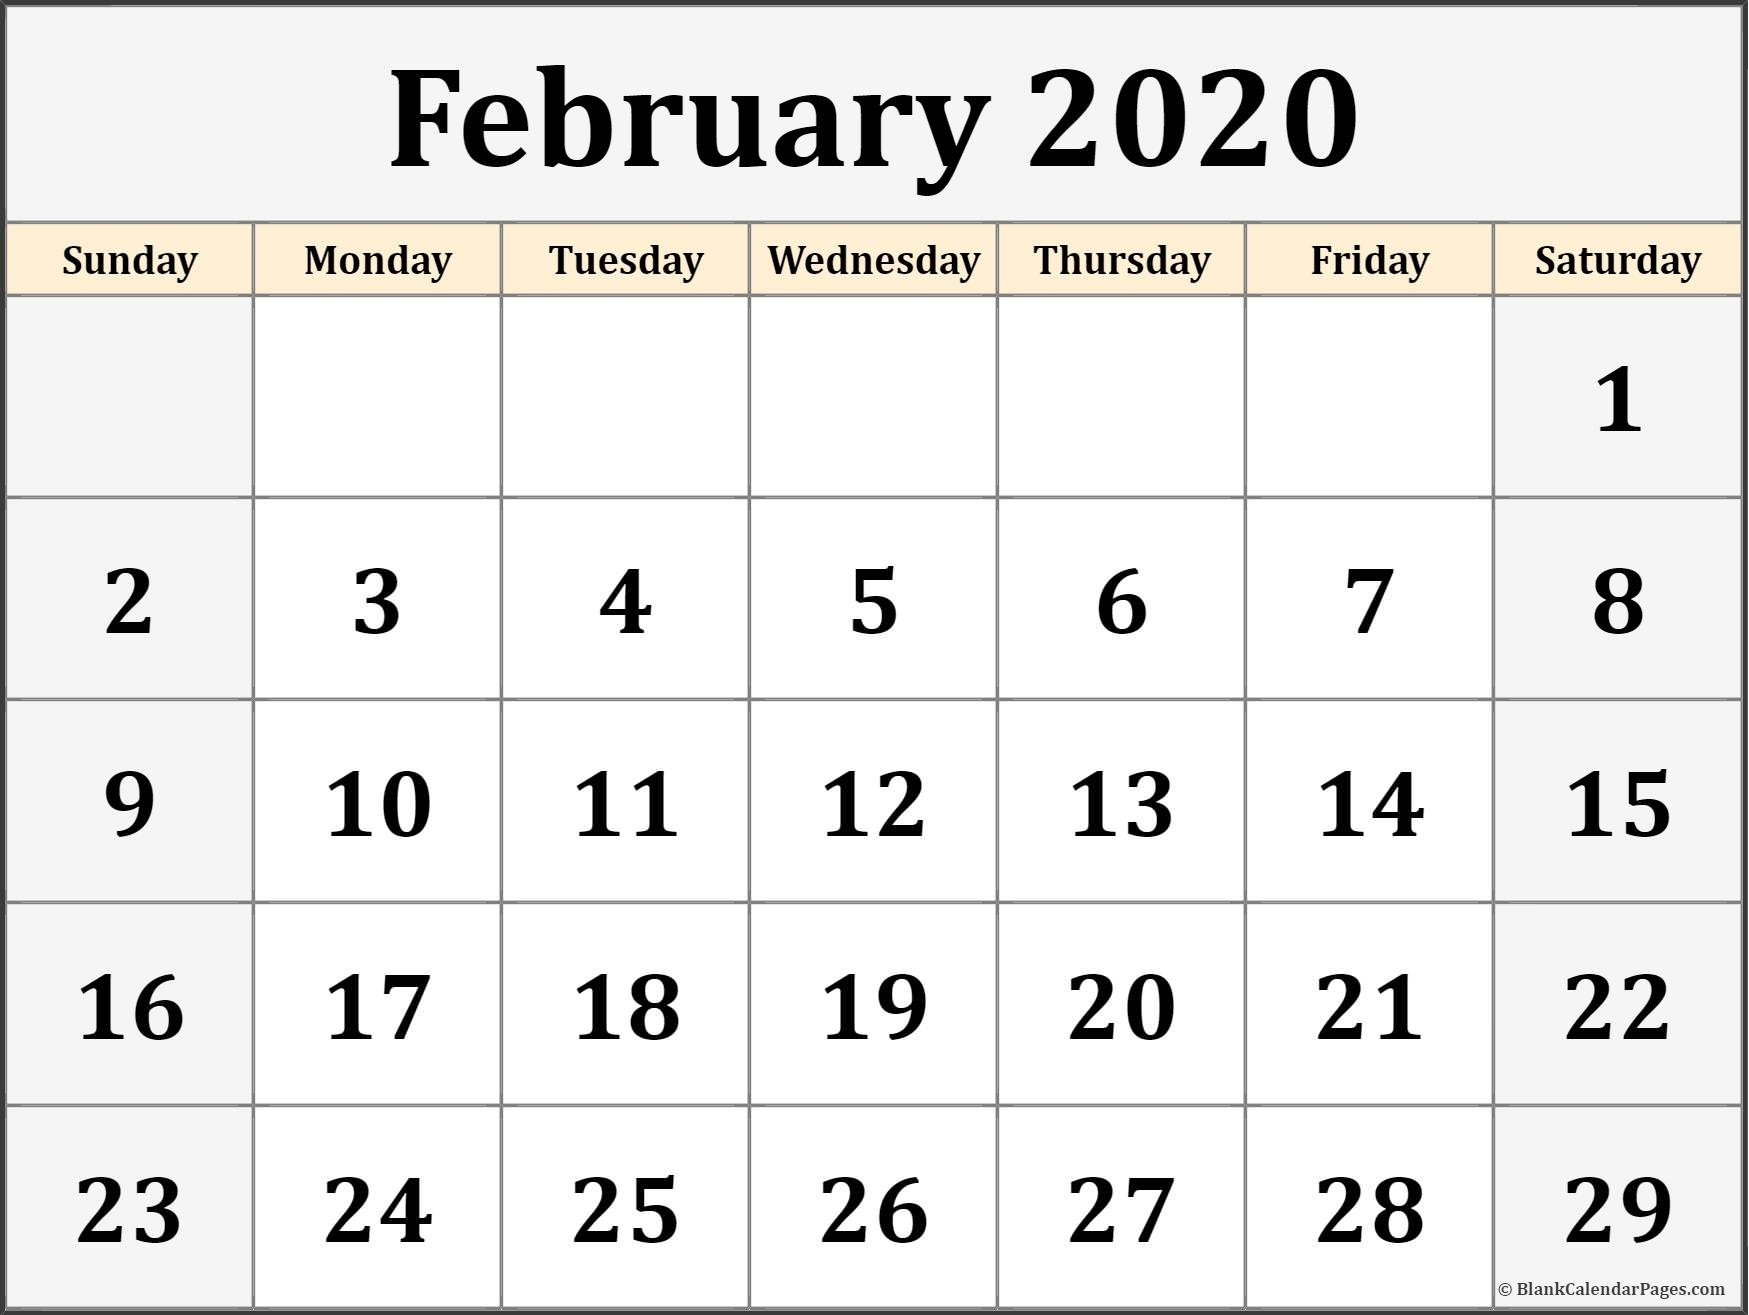 February 2020 calendar